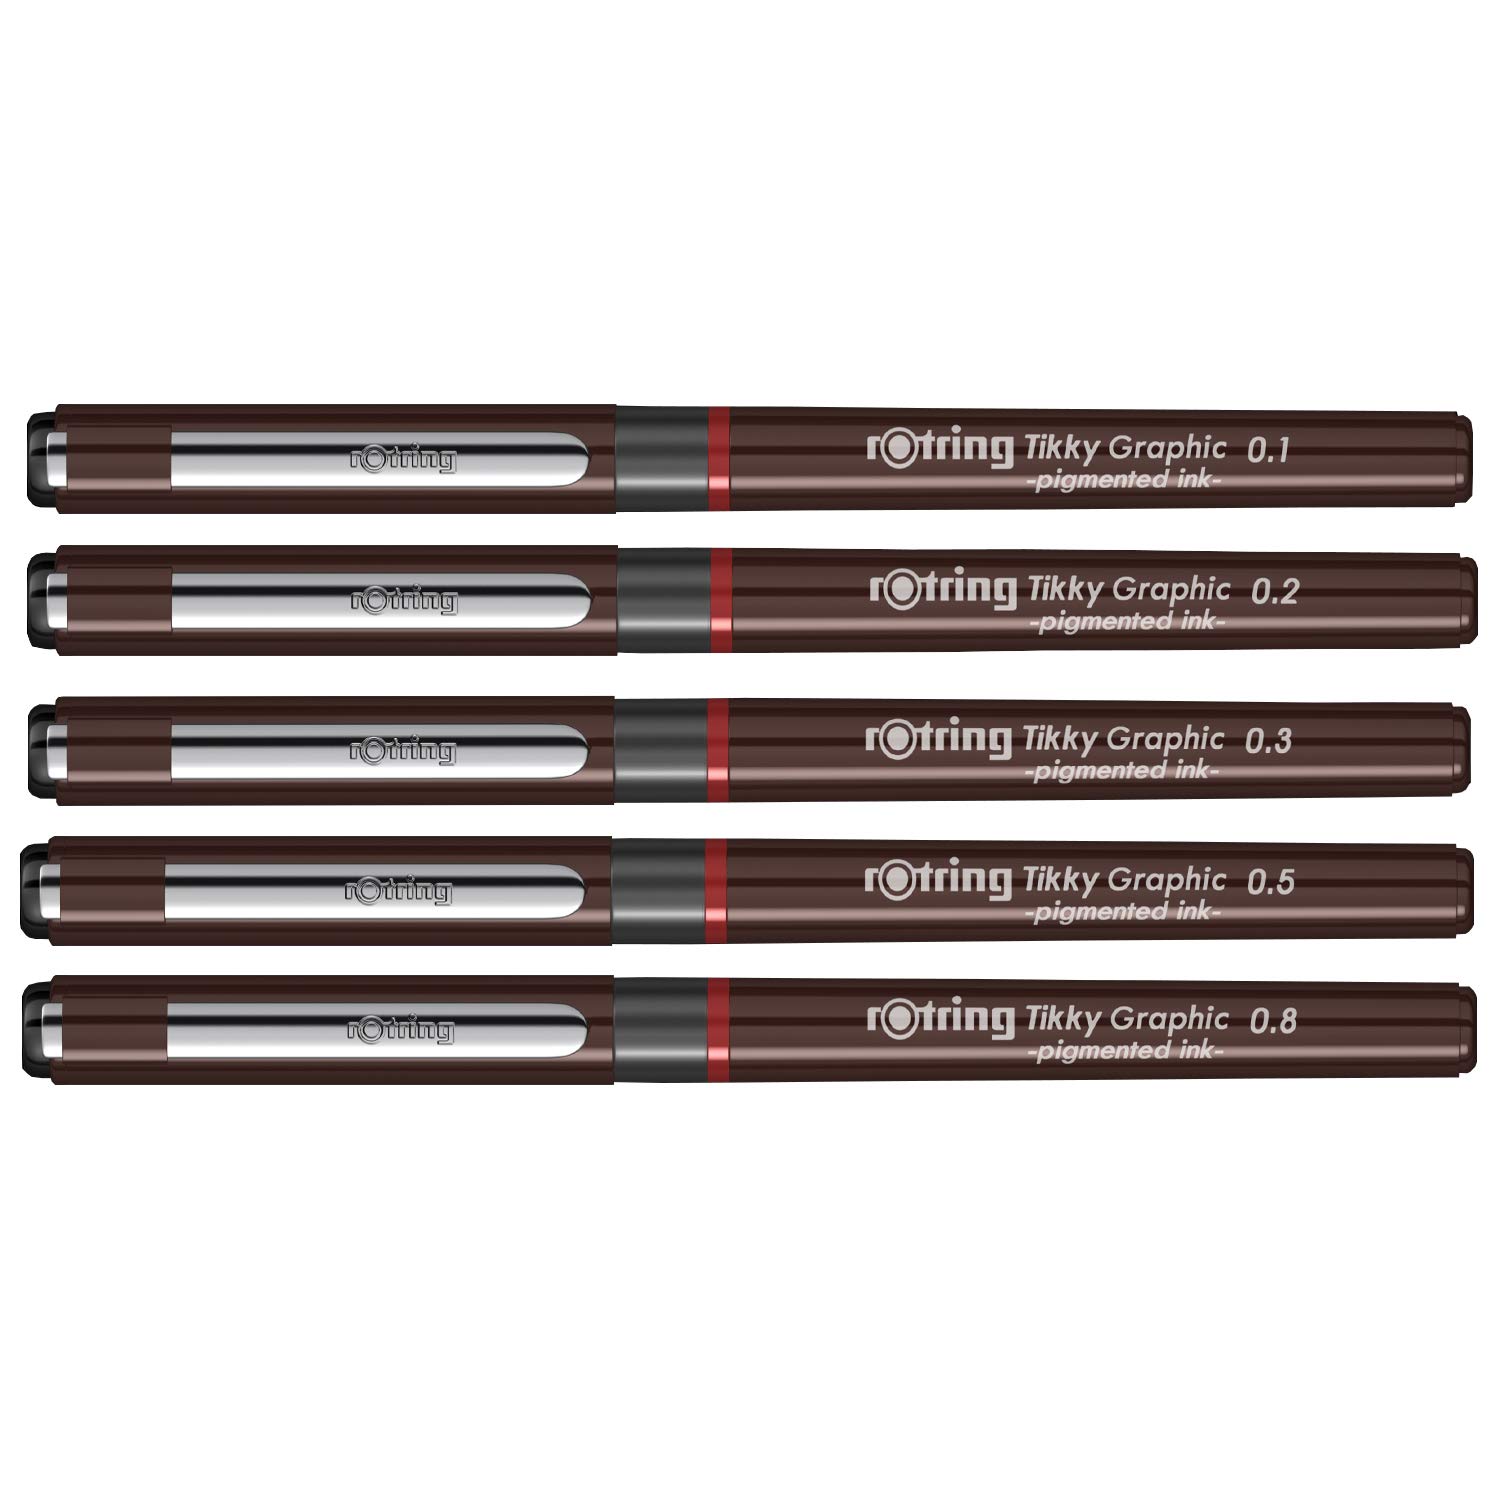 Rotring 3 pen set 0.2, 0.4, 0.8mm